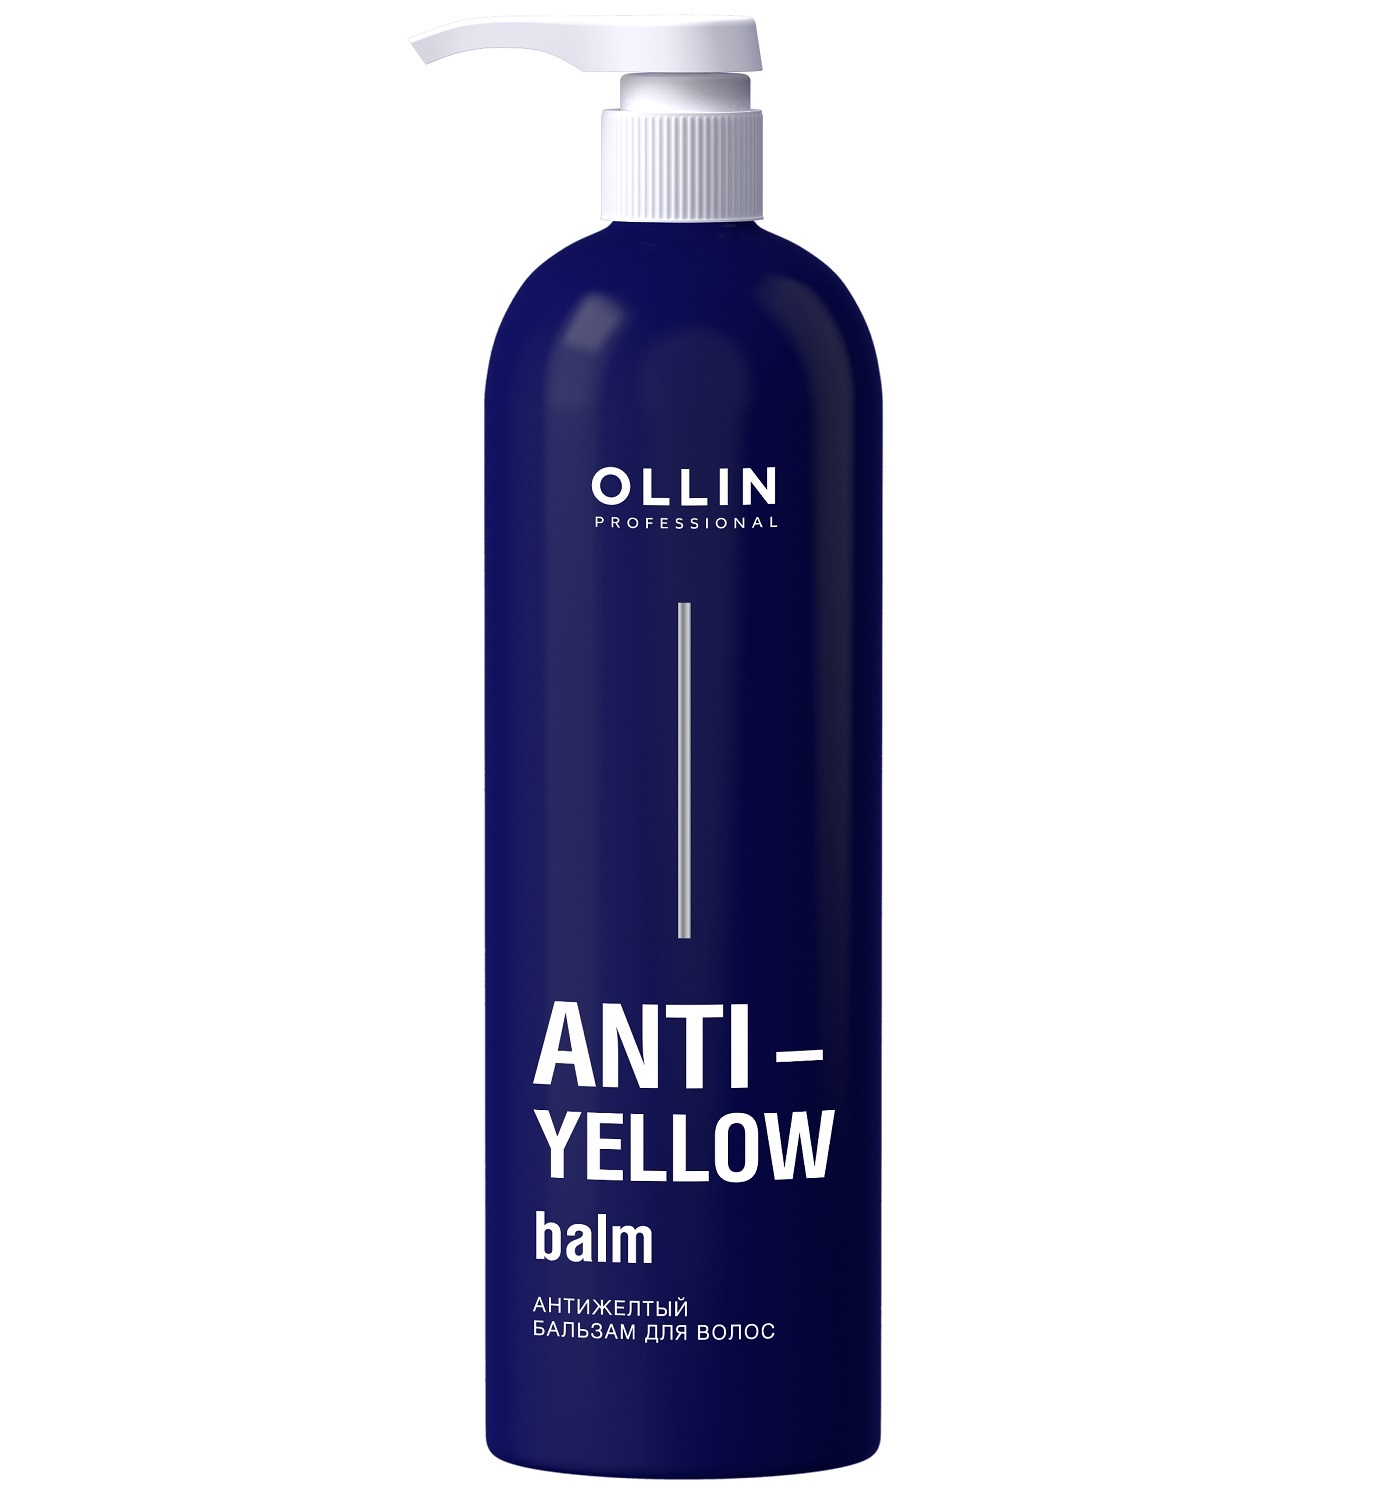 Ollin Professional Антижелтый бальзам для волос Anti-Yellow Balm, 500 мл (Ollin Professional, Anti-Yellow) антижелтый шампунь для волос anti yellow ollin 250 мл